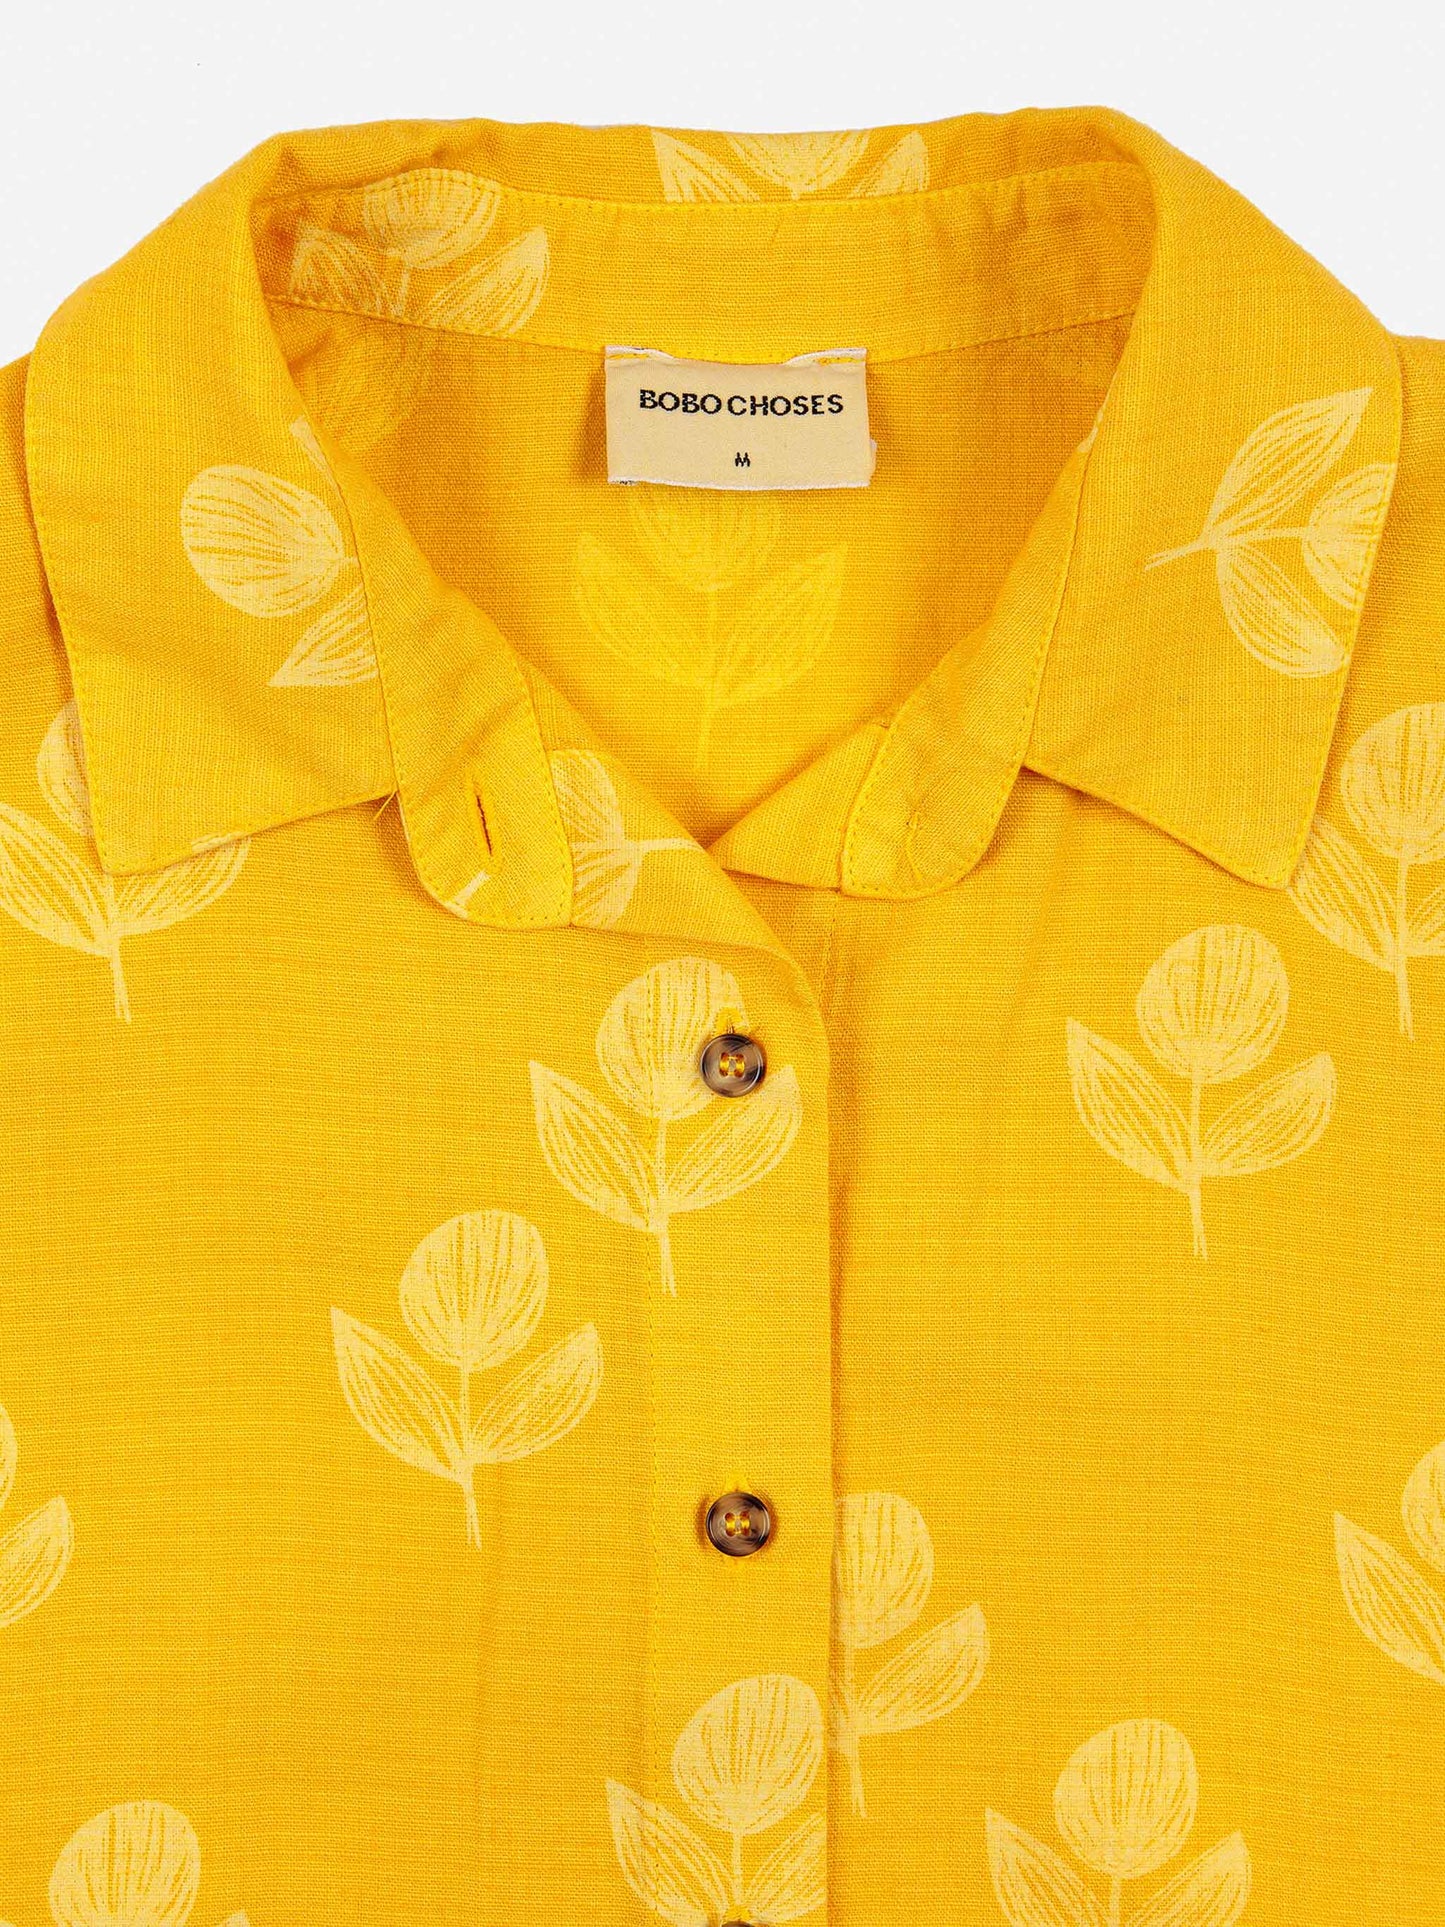 Bloom Shirt